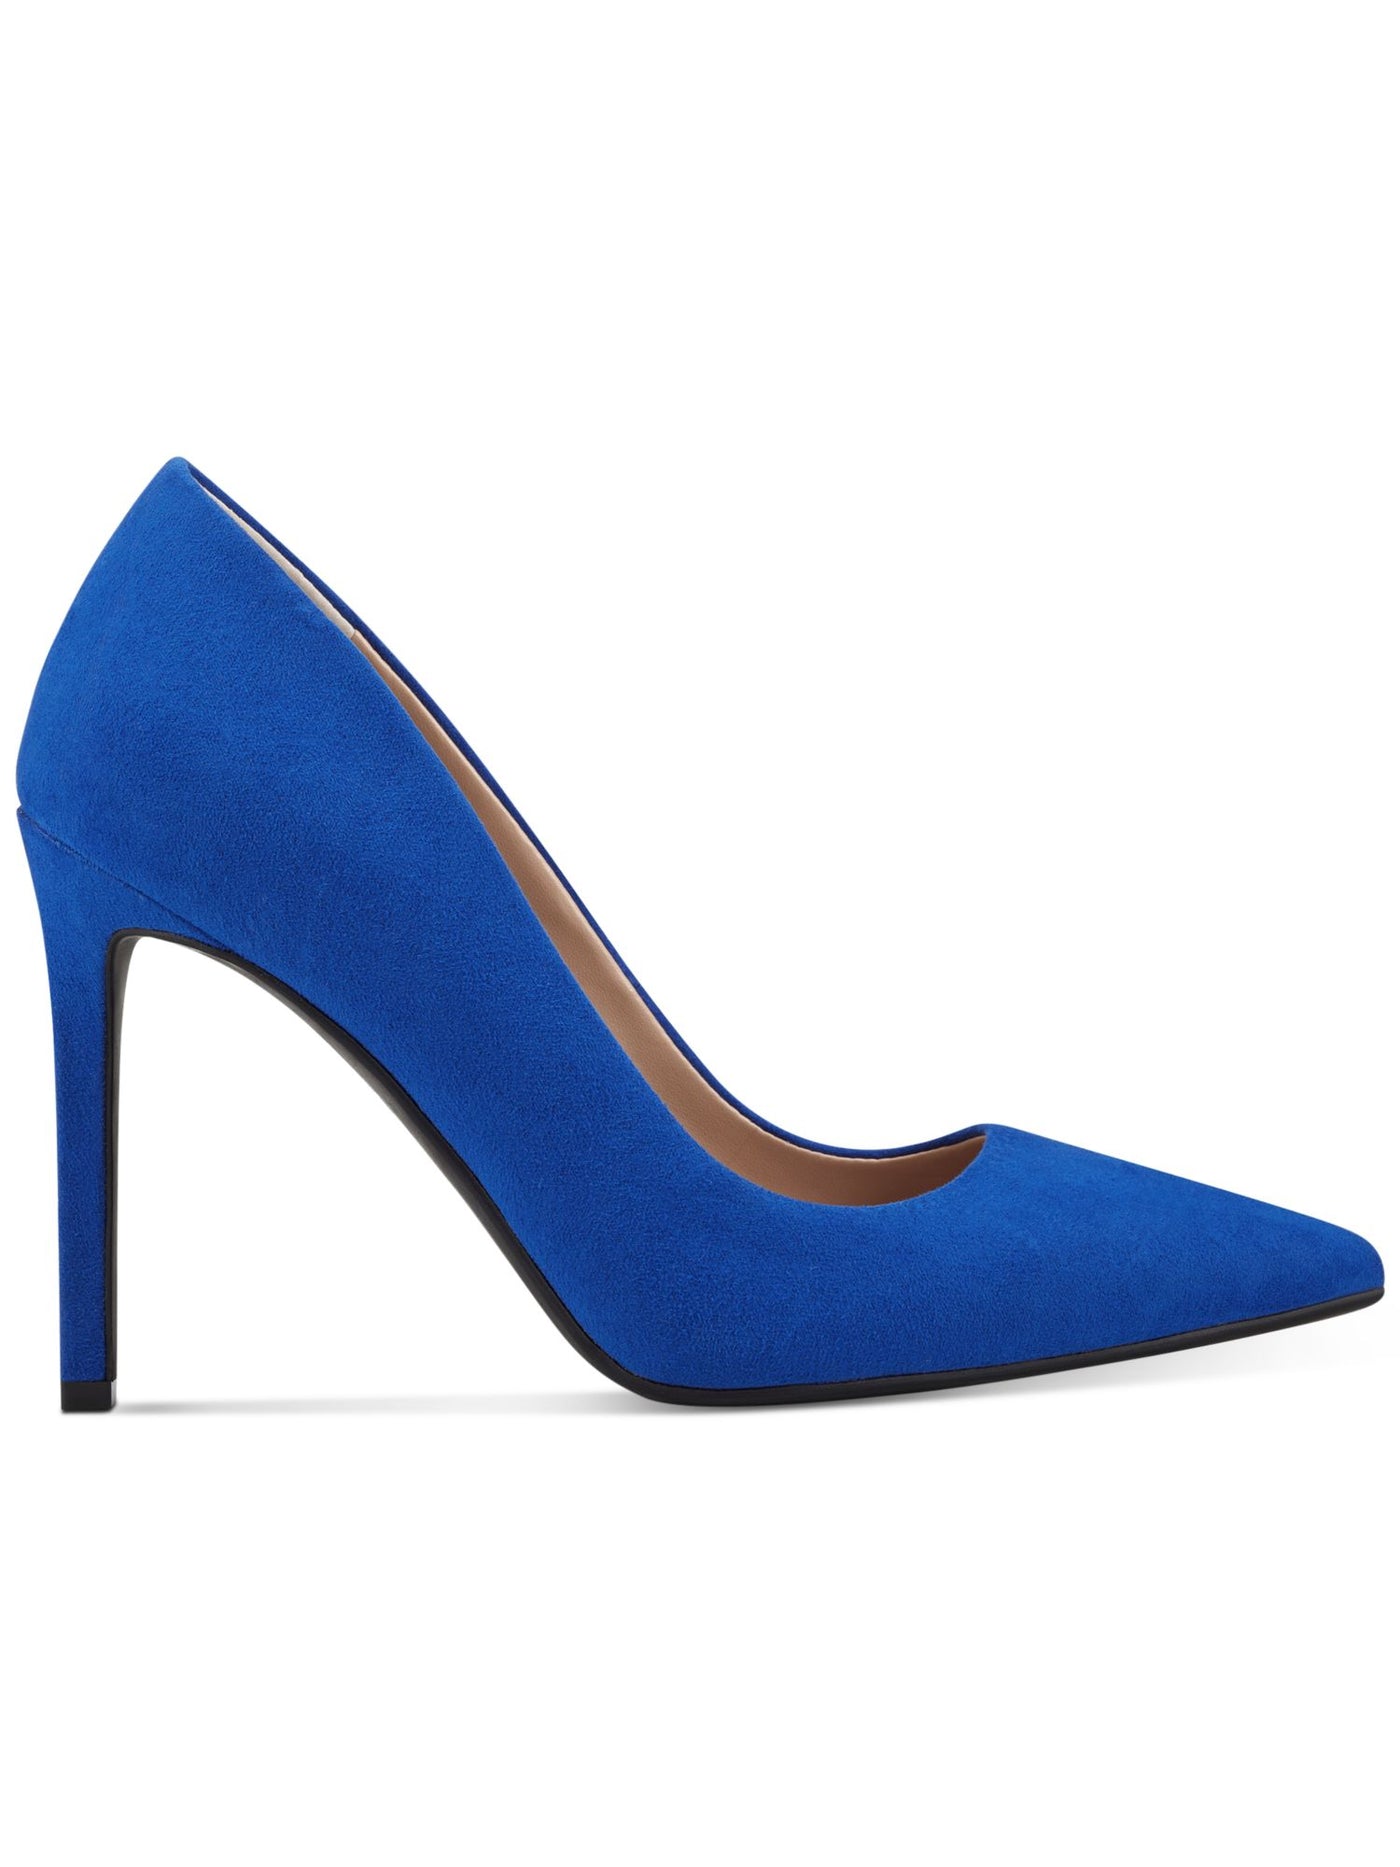 INC Womens Blue Padded Shelya Pointed Toe Stiletto Slip On Dress Pumps Shoes 8.5 M